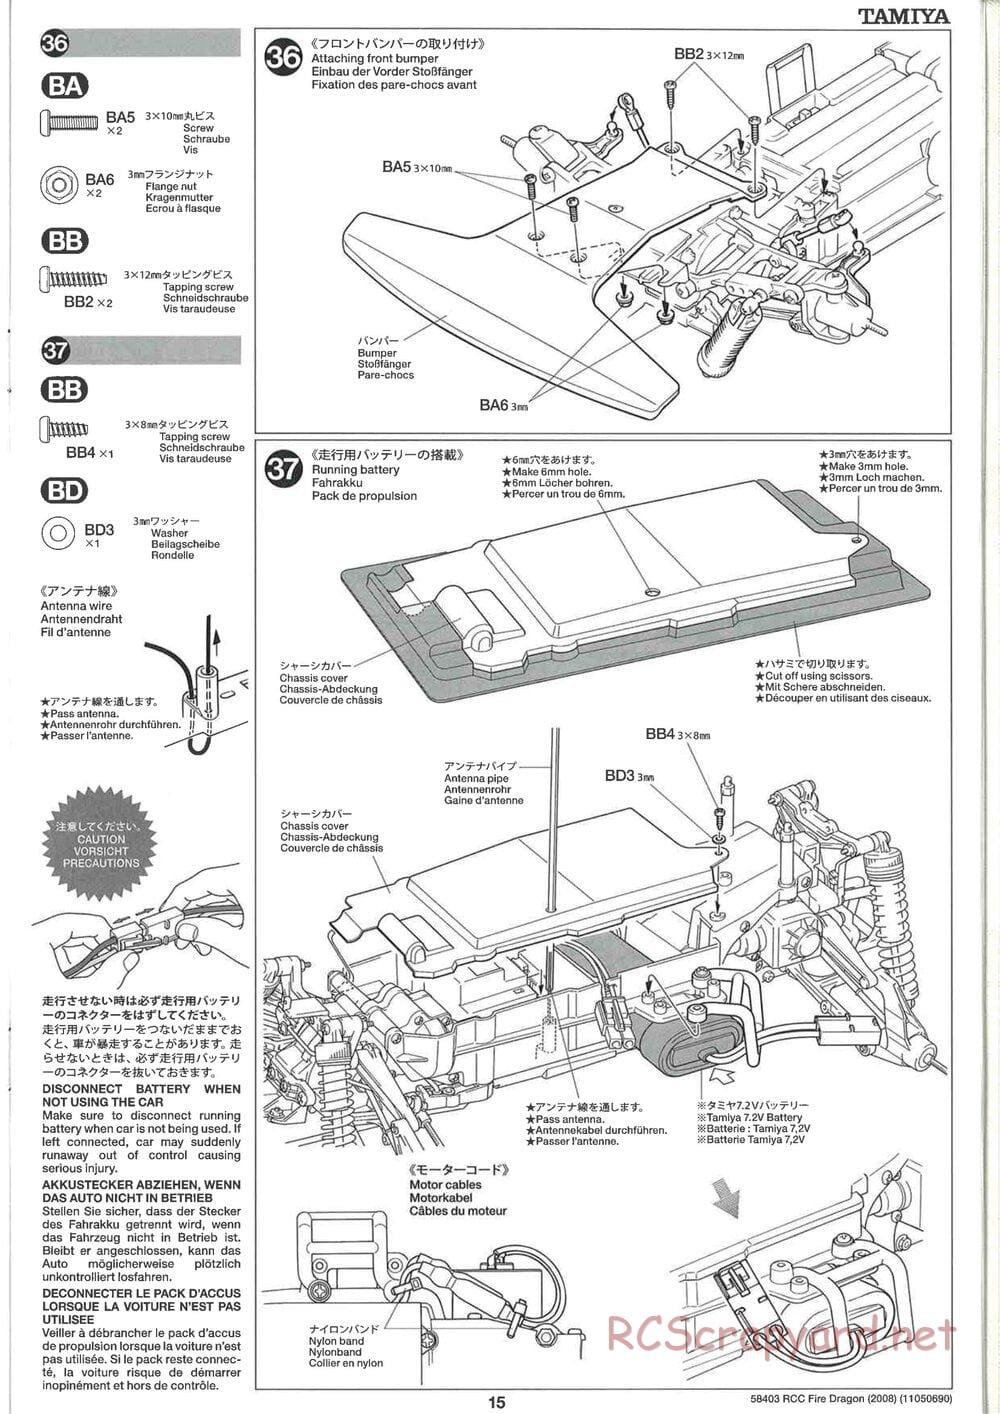 Tamiya - Fire Dragon 2008 - TS2 Chassis - Manual - Page 15